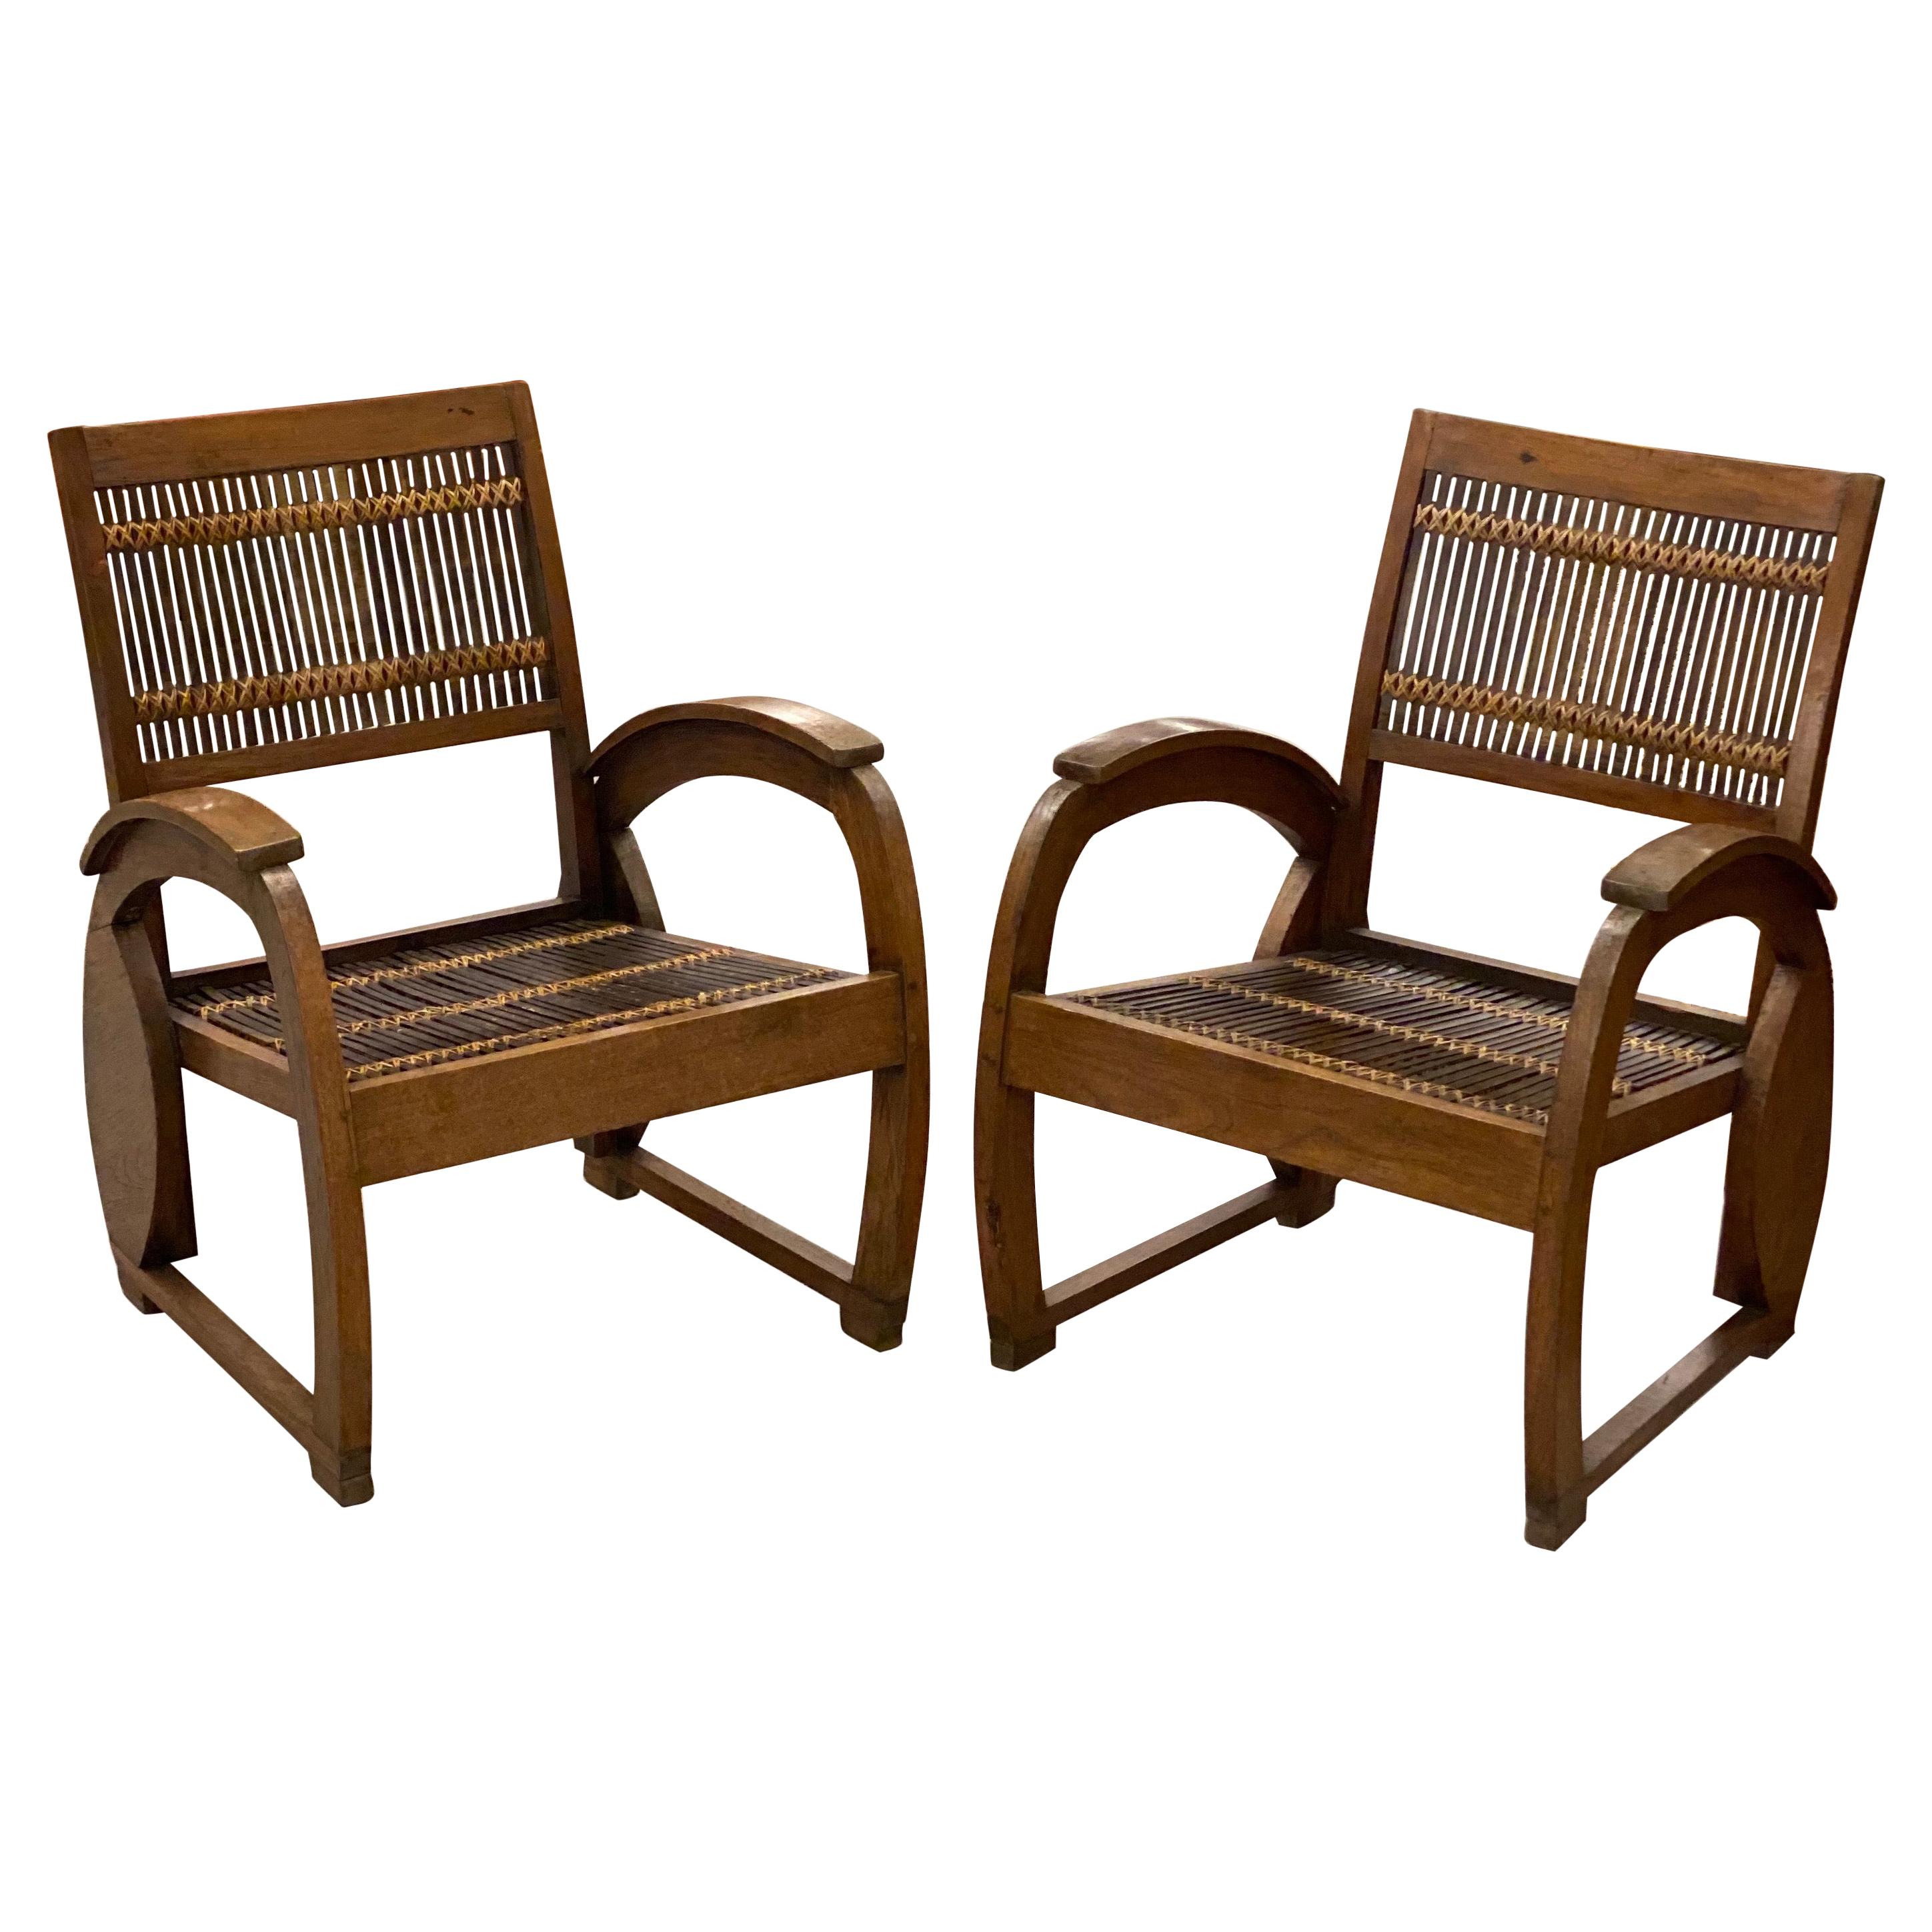 Pair of Vintage Balinese Rattan Chairs